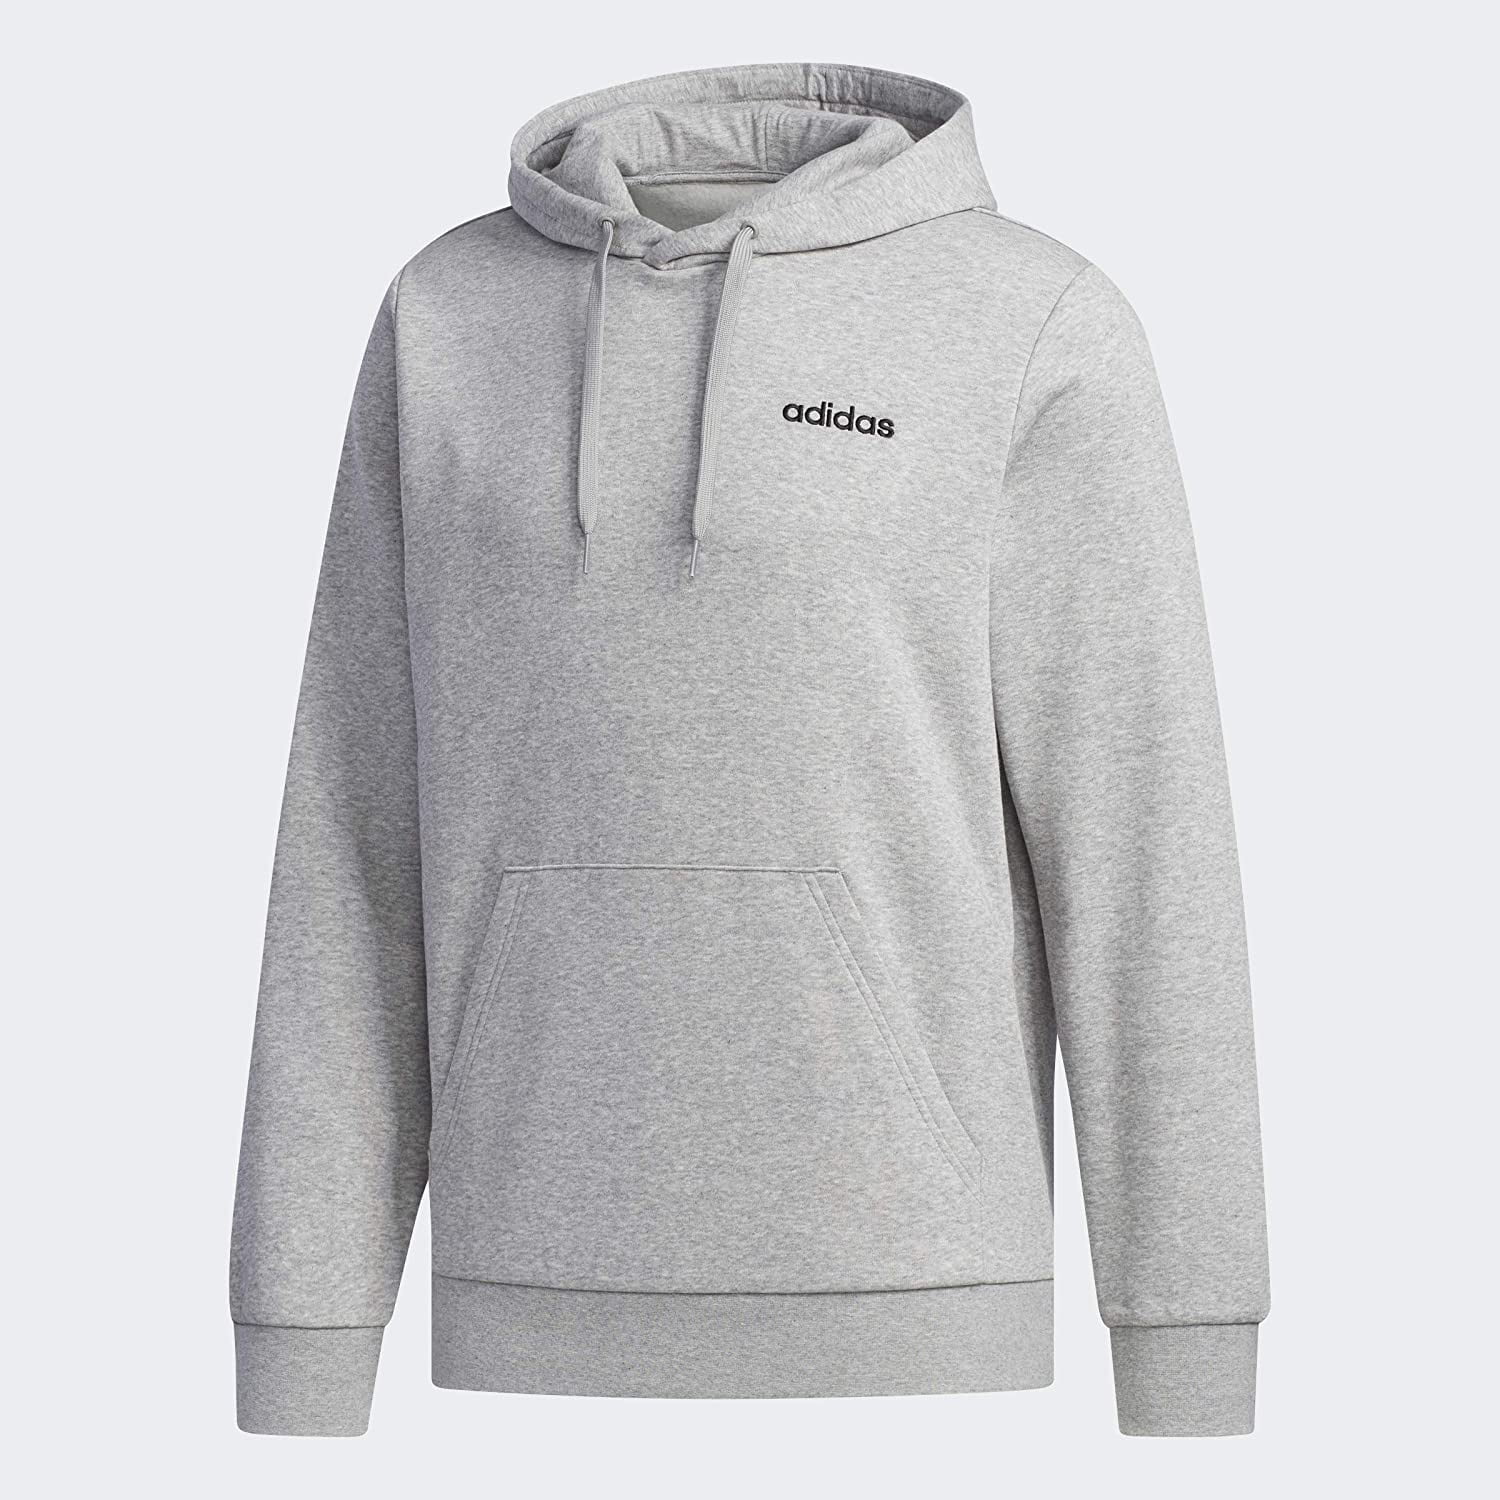 Adidas Essentials Colorblock Sweatshirt - White/Grey/Black